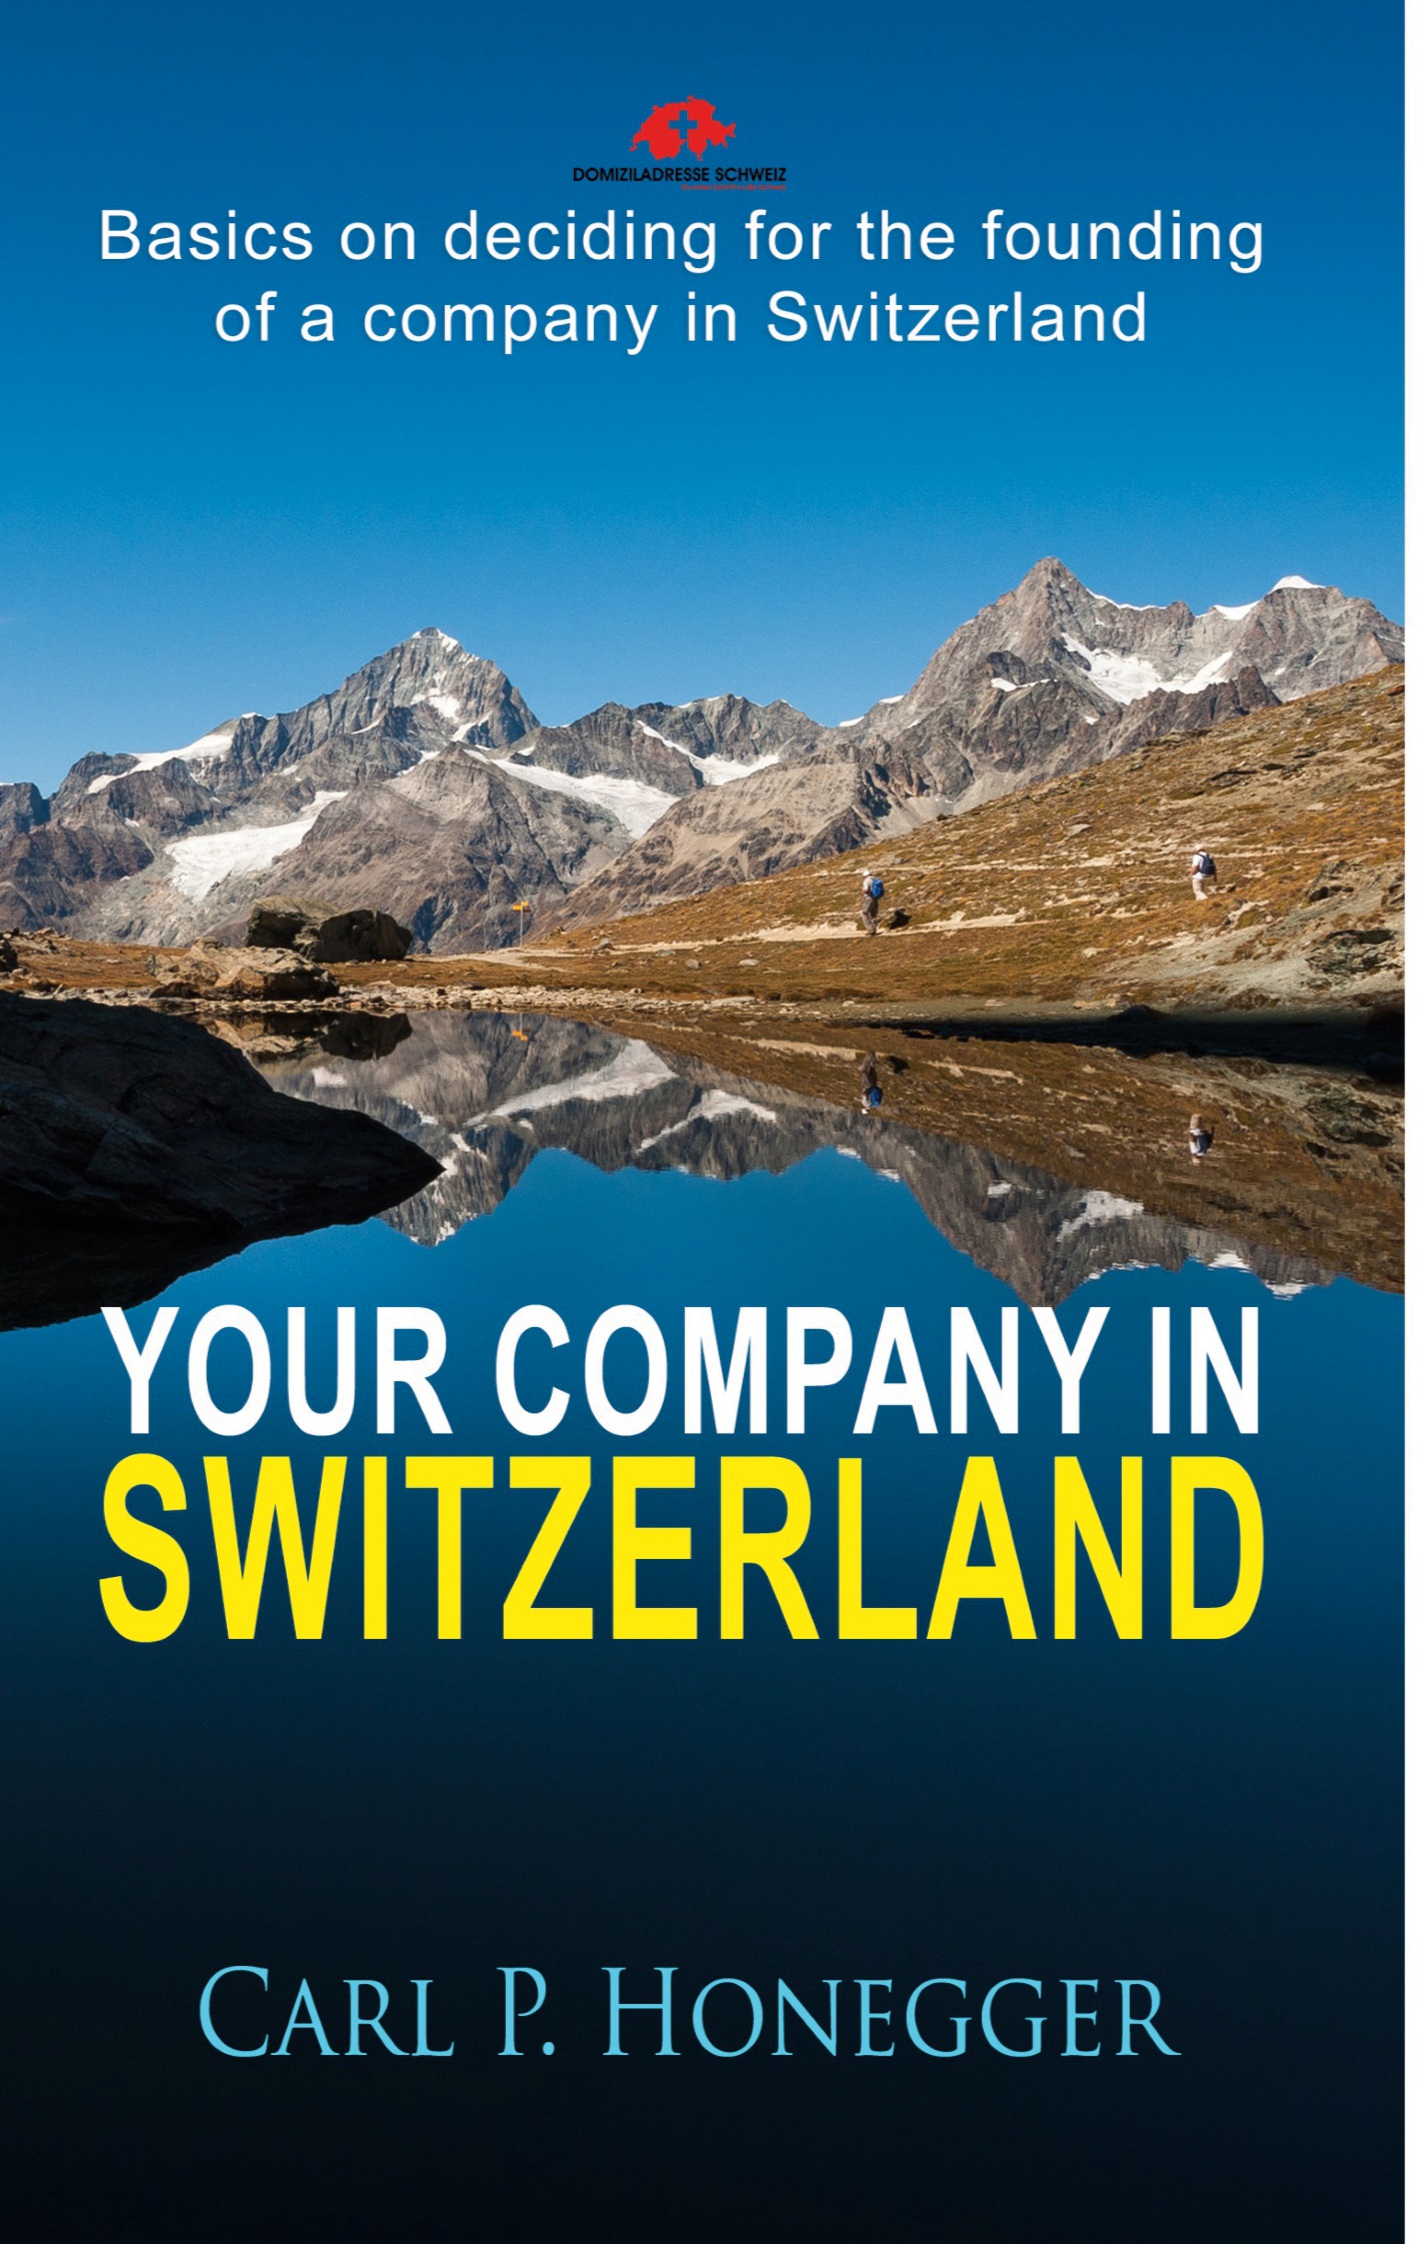 Your company in Switzerland